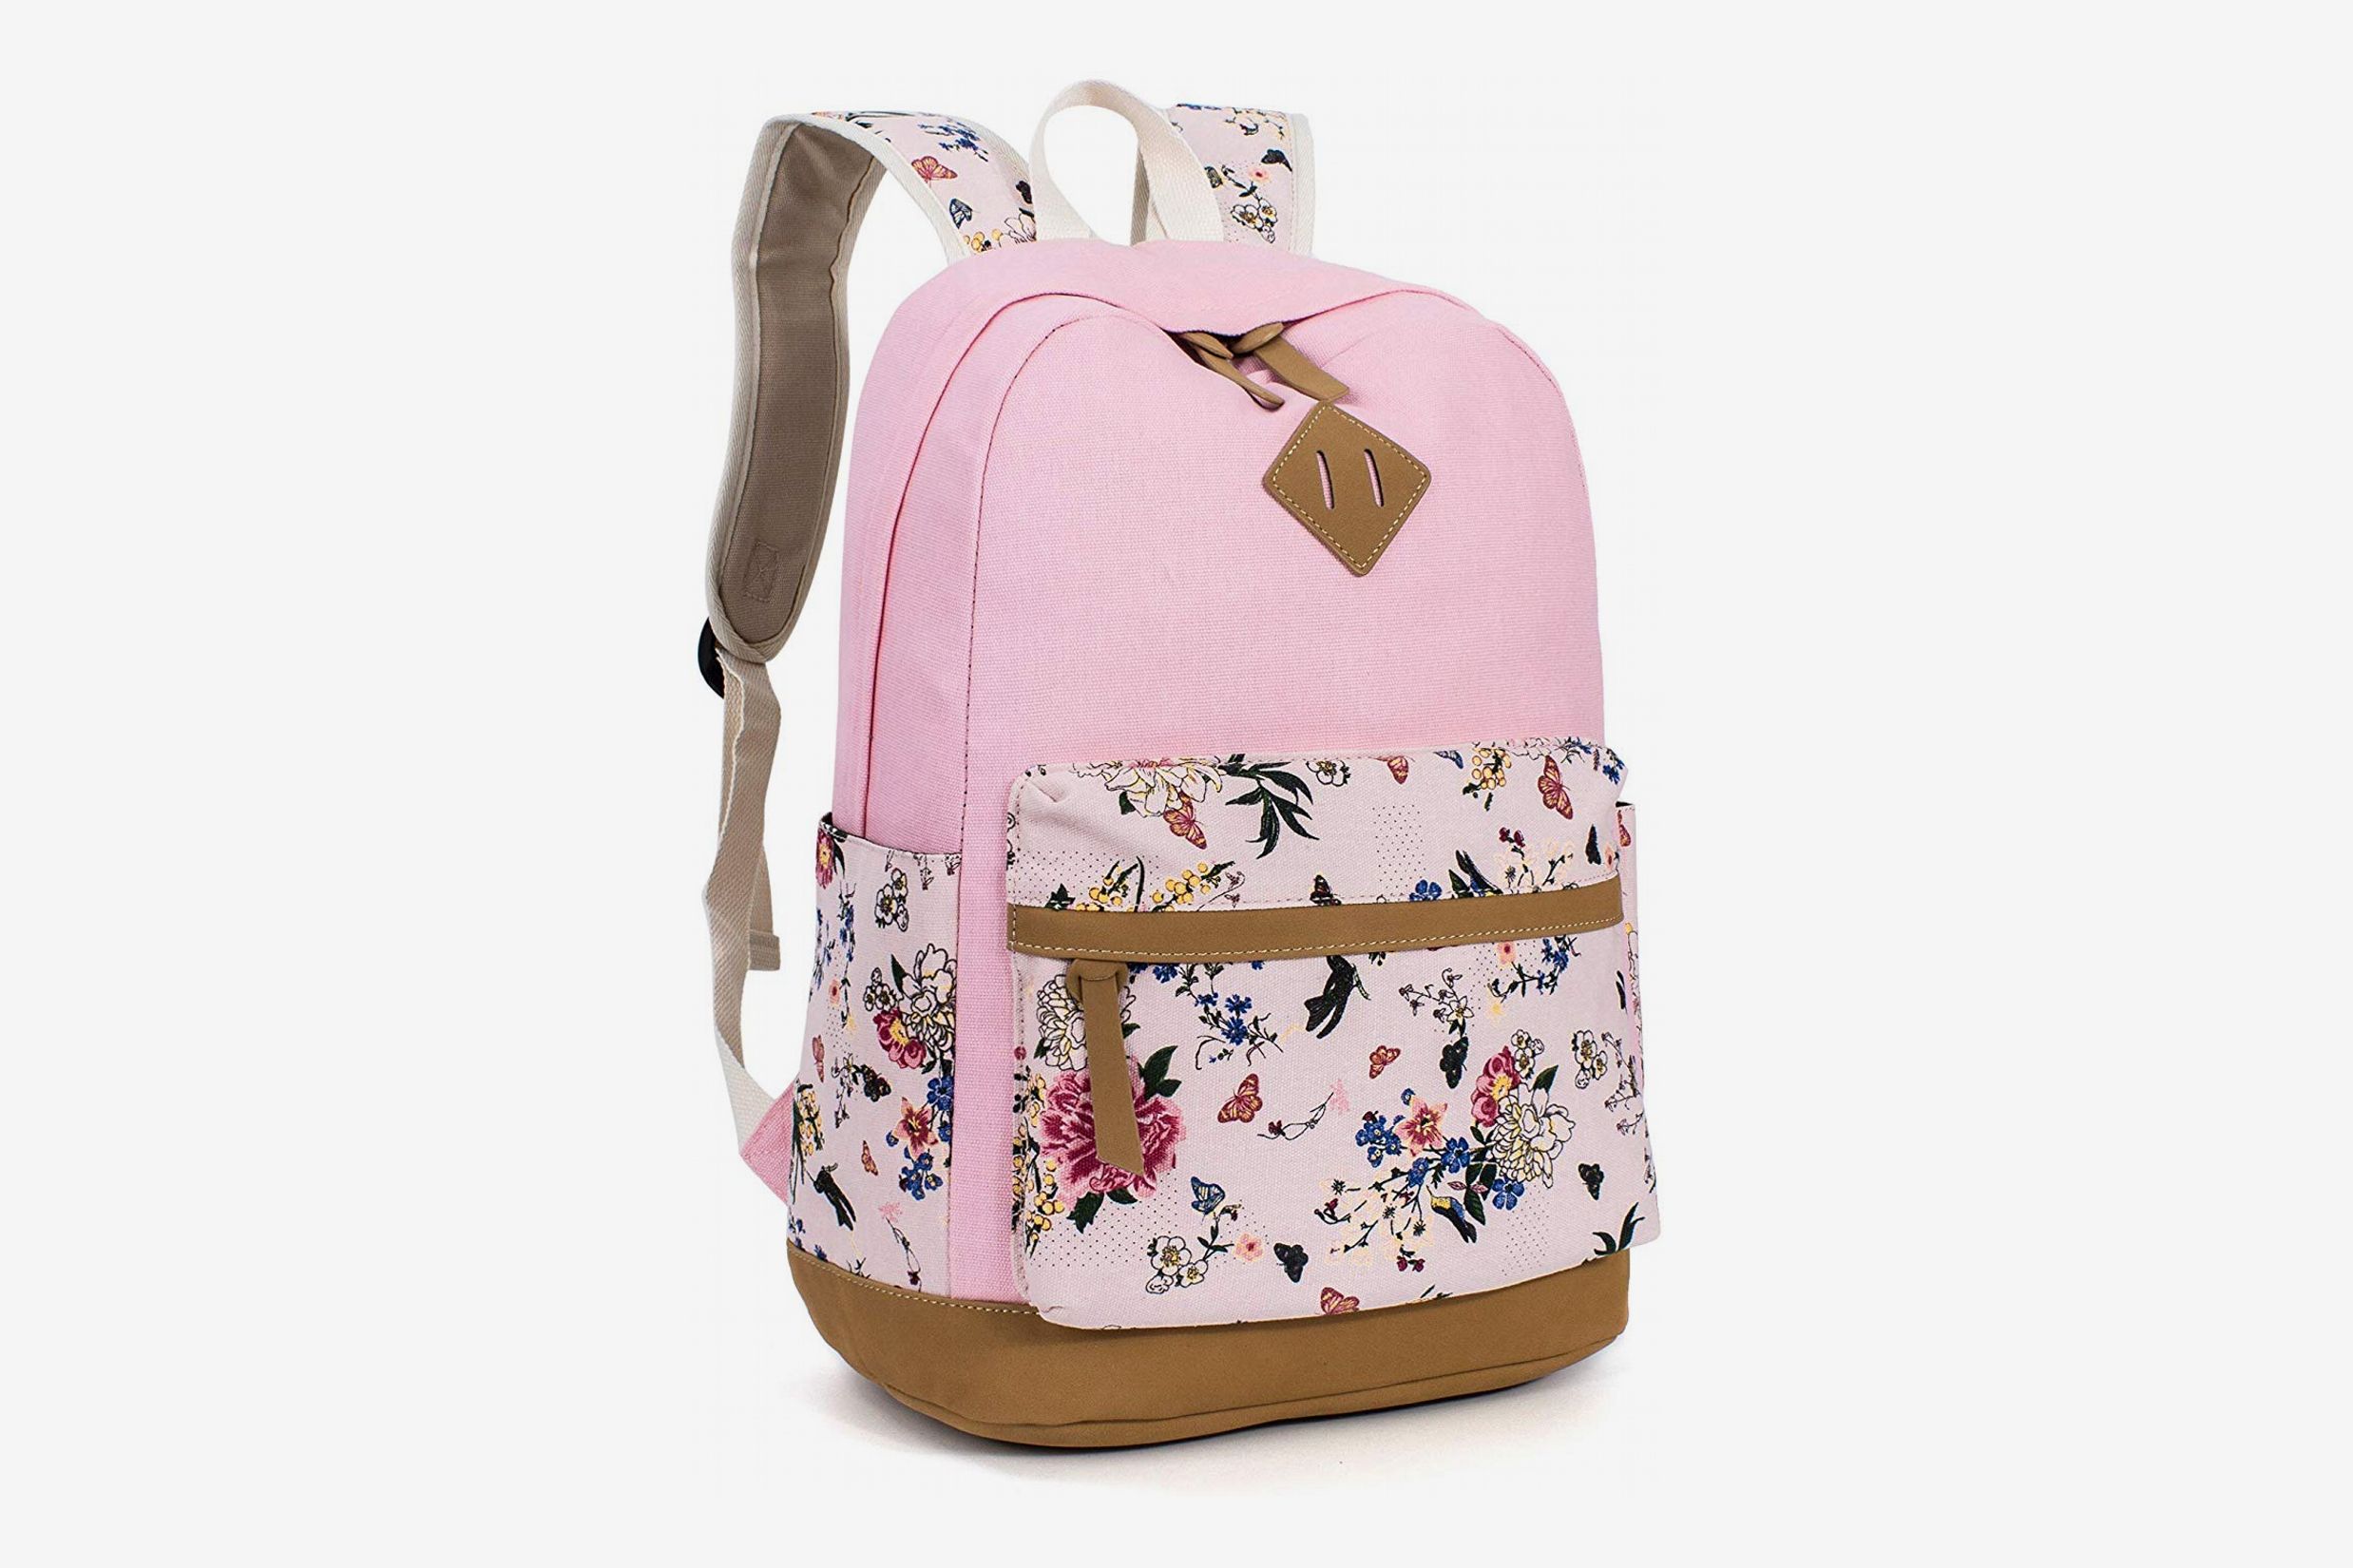 Hype Backpack Rucksack Bag School Bags New Designs For 2019 Flower Pocket 